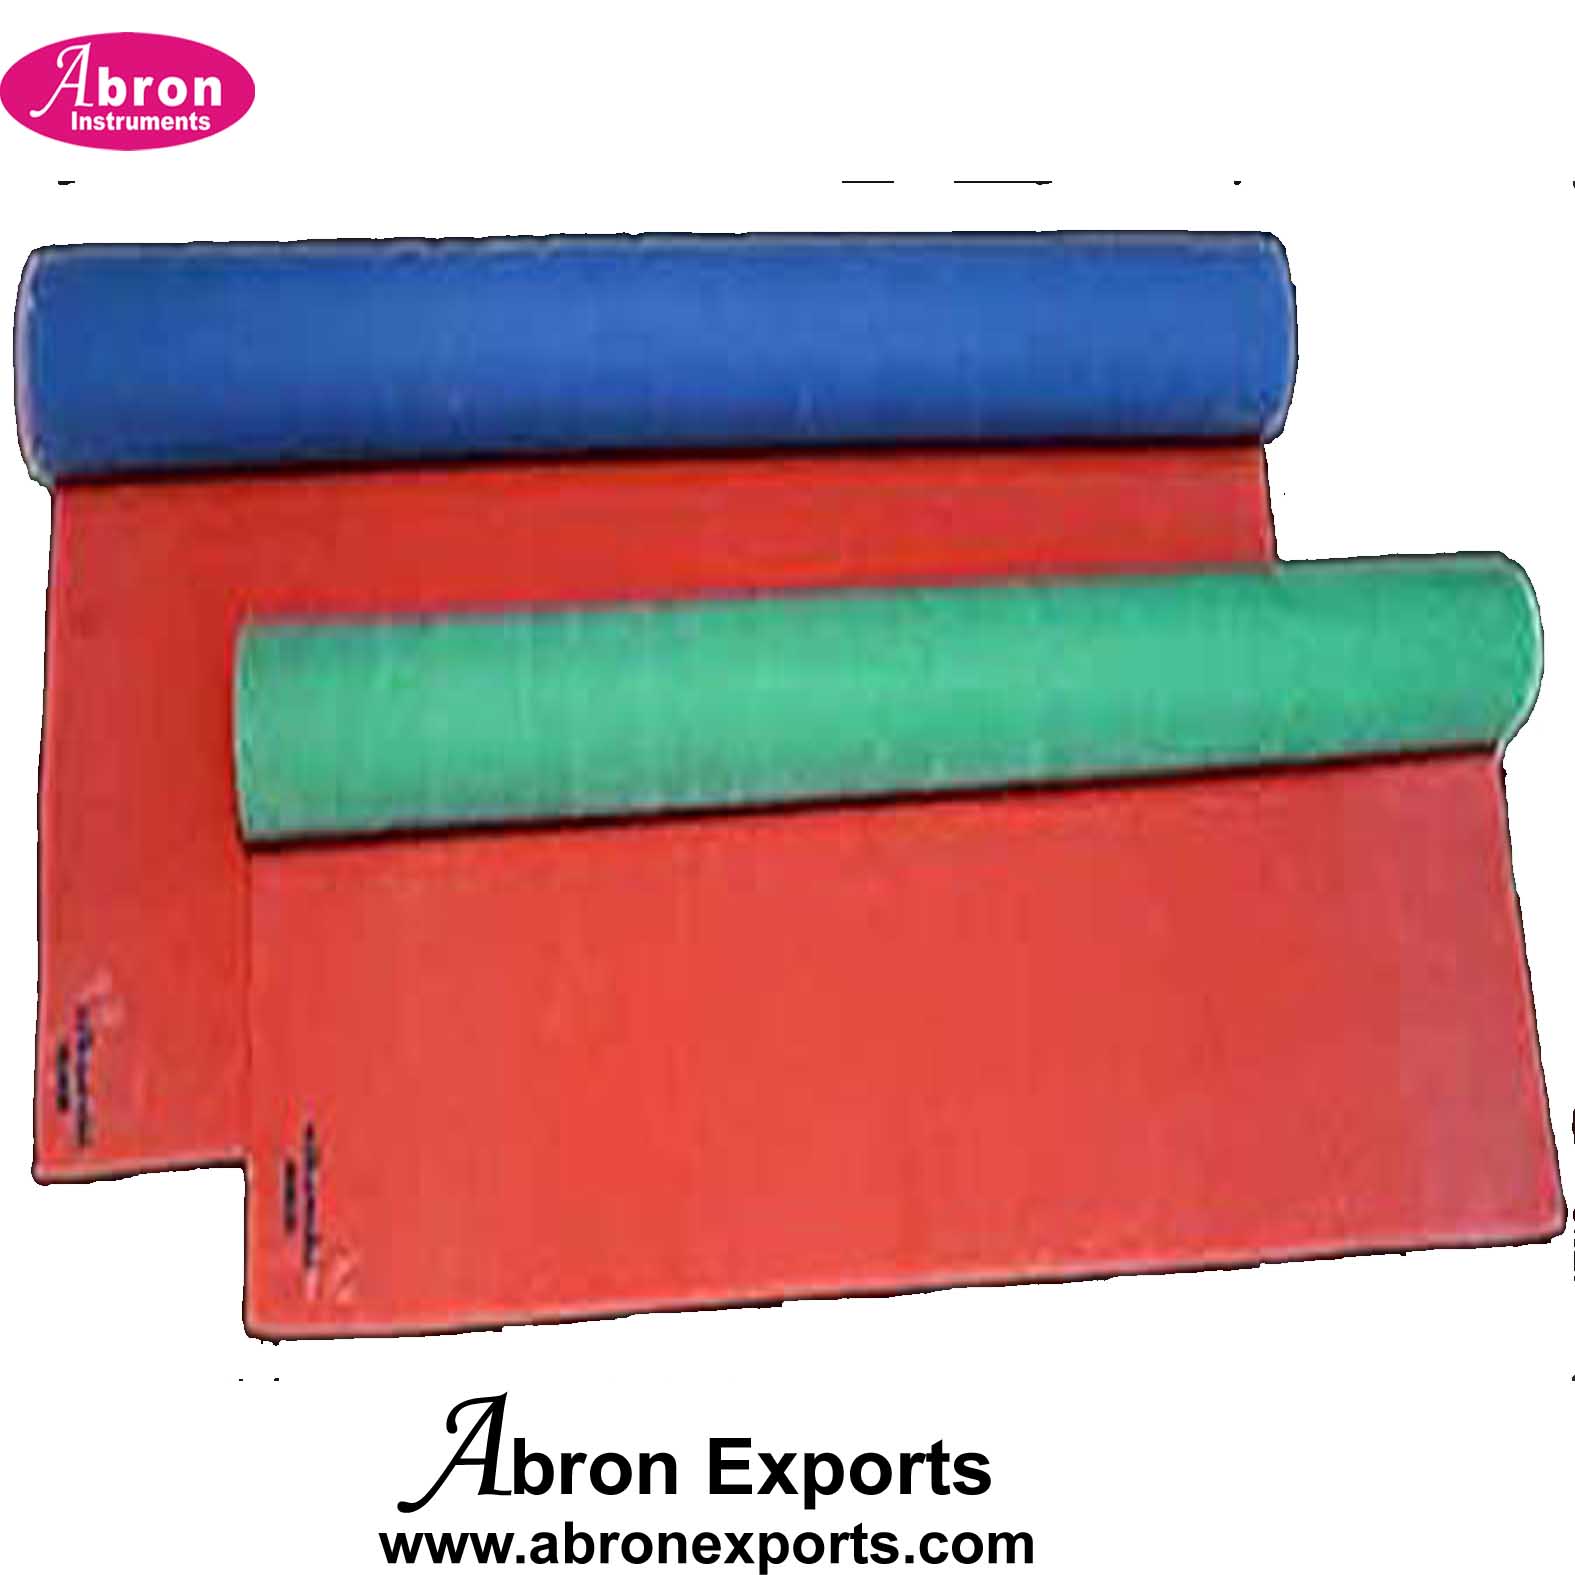 mackintosh sheet 10meter rubber sheet for hospital bed 90cmx10meter roll ABM-2525-R10